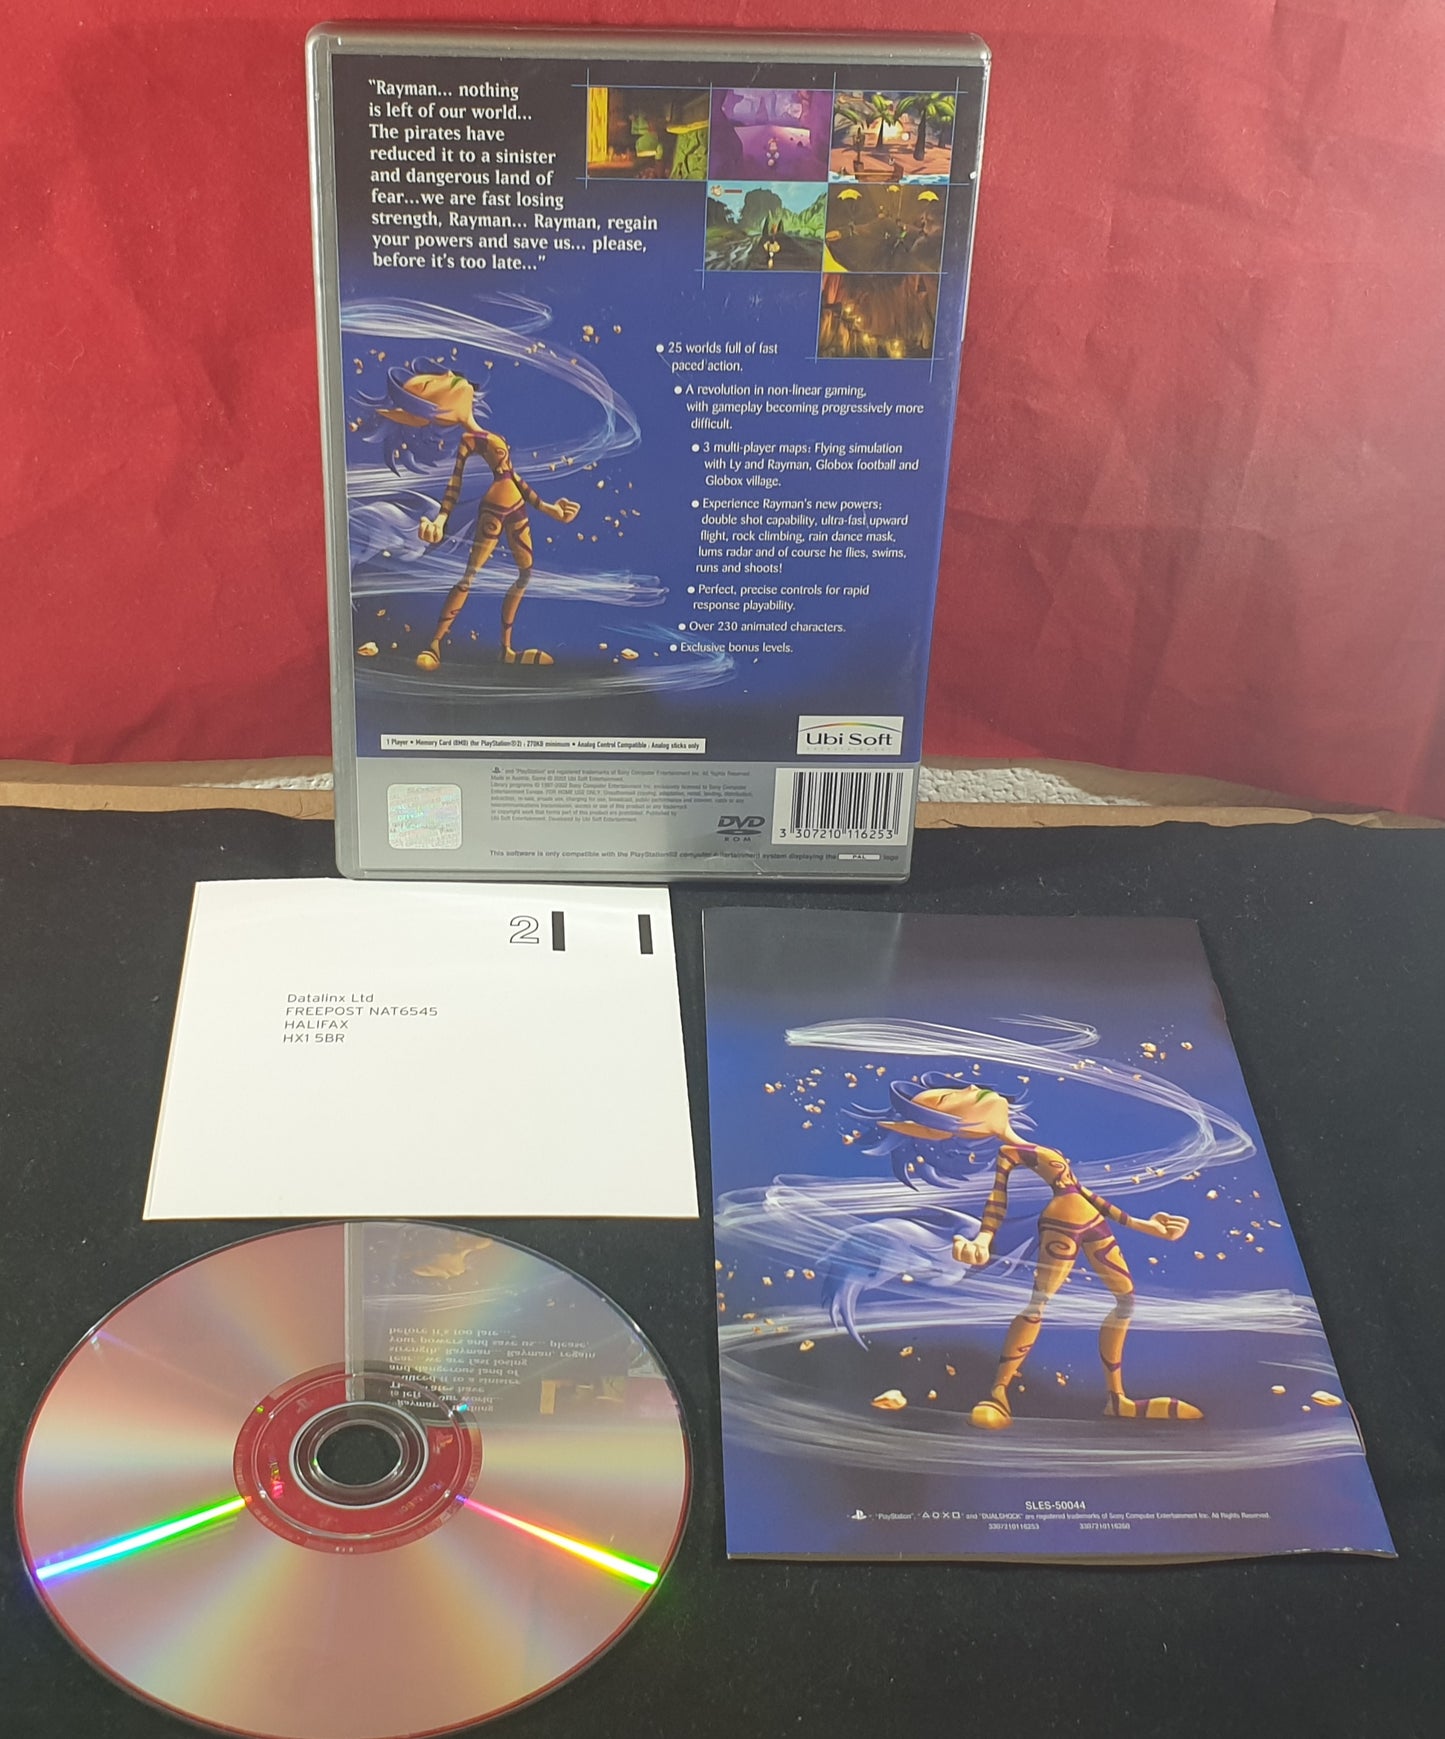 Rayman Revolution Platinum Sony Playstation 2 (PS2) Game